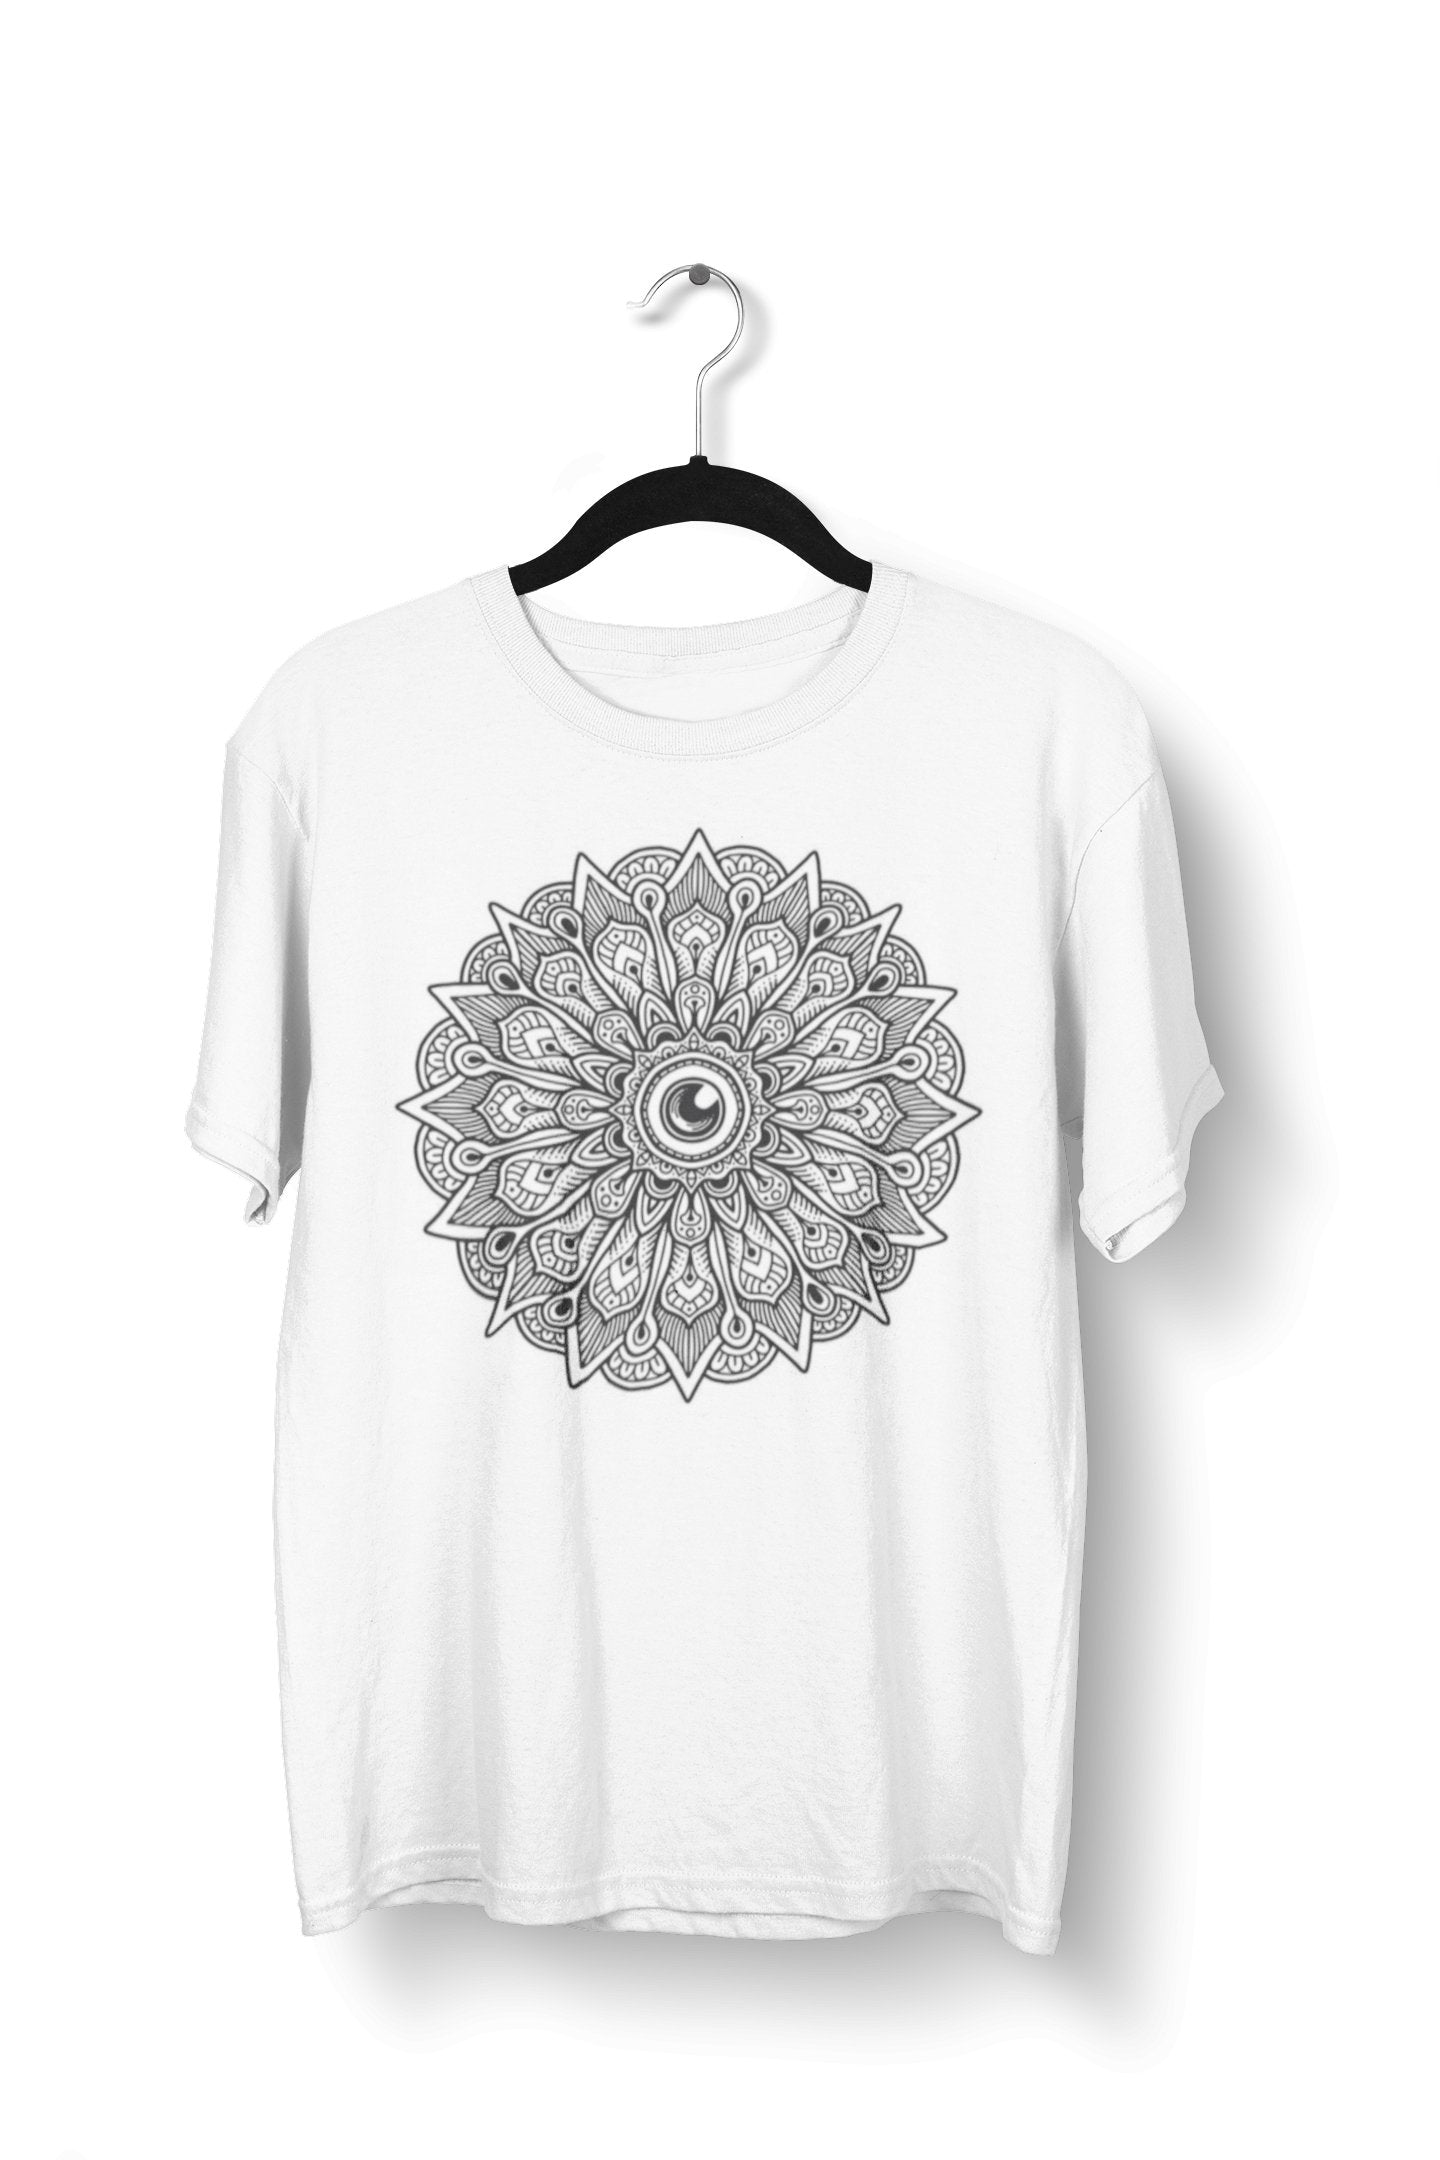 thelegalgang,Psychedelic Mandala Graphic Art T-Shirt for Men,.